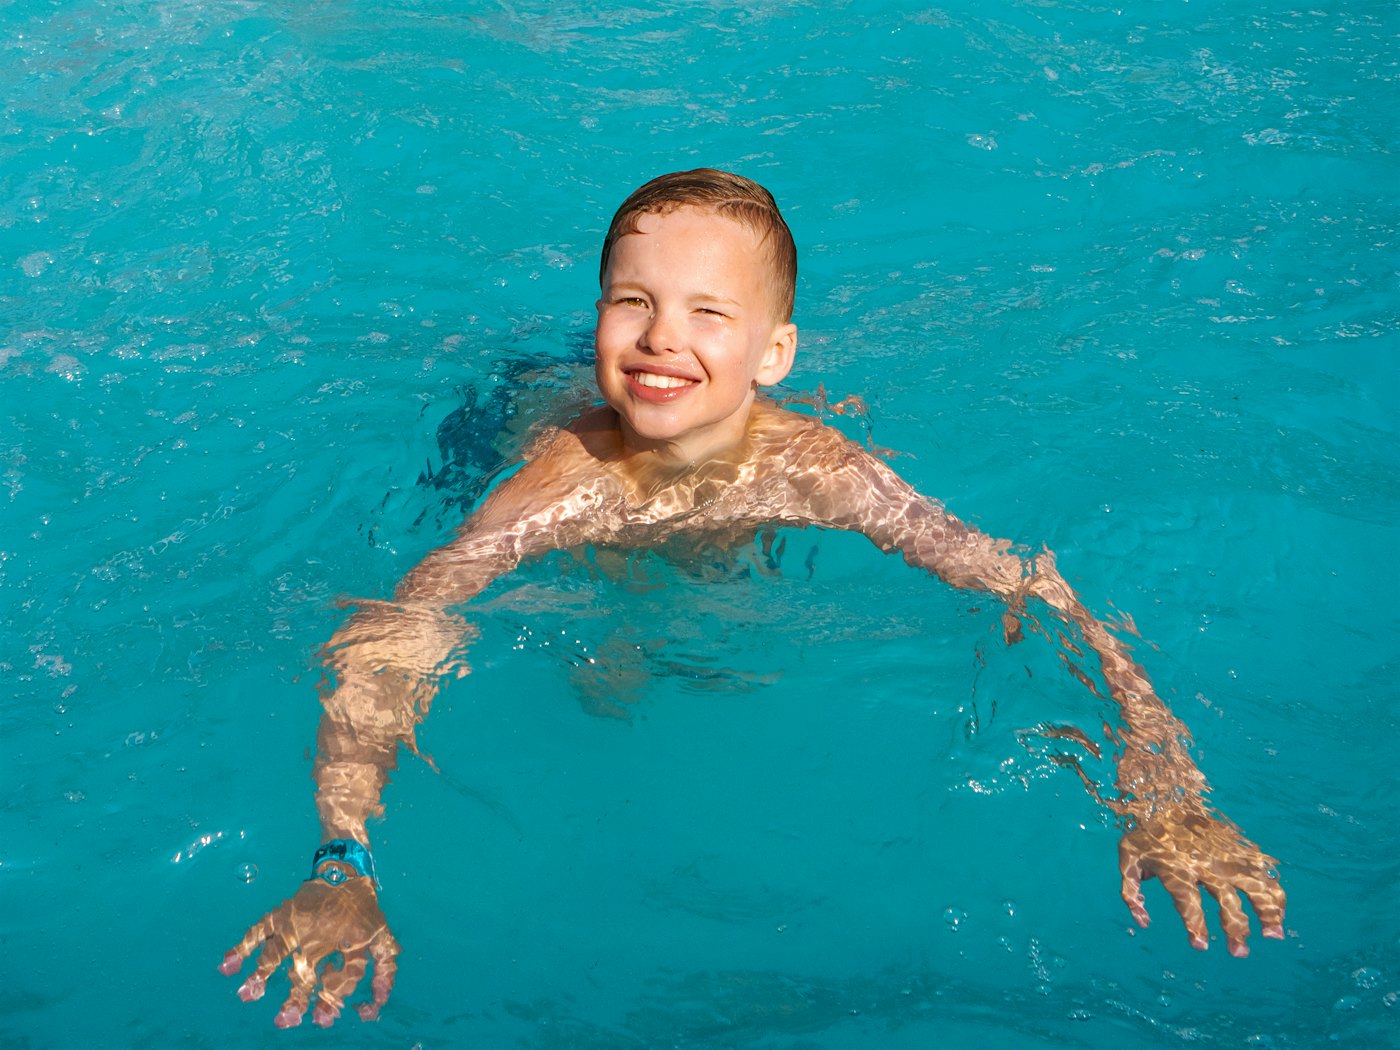 Smiling boy swimming in pool. Photo